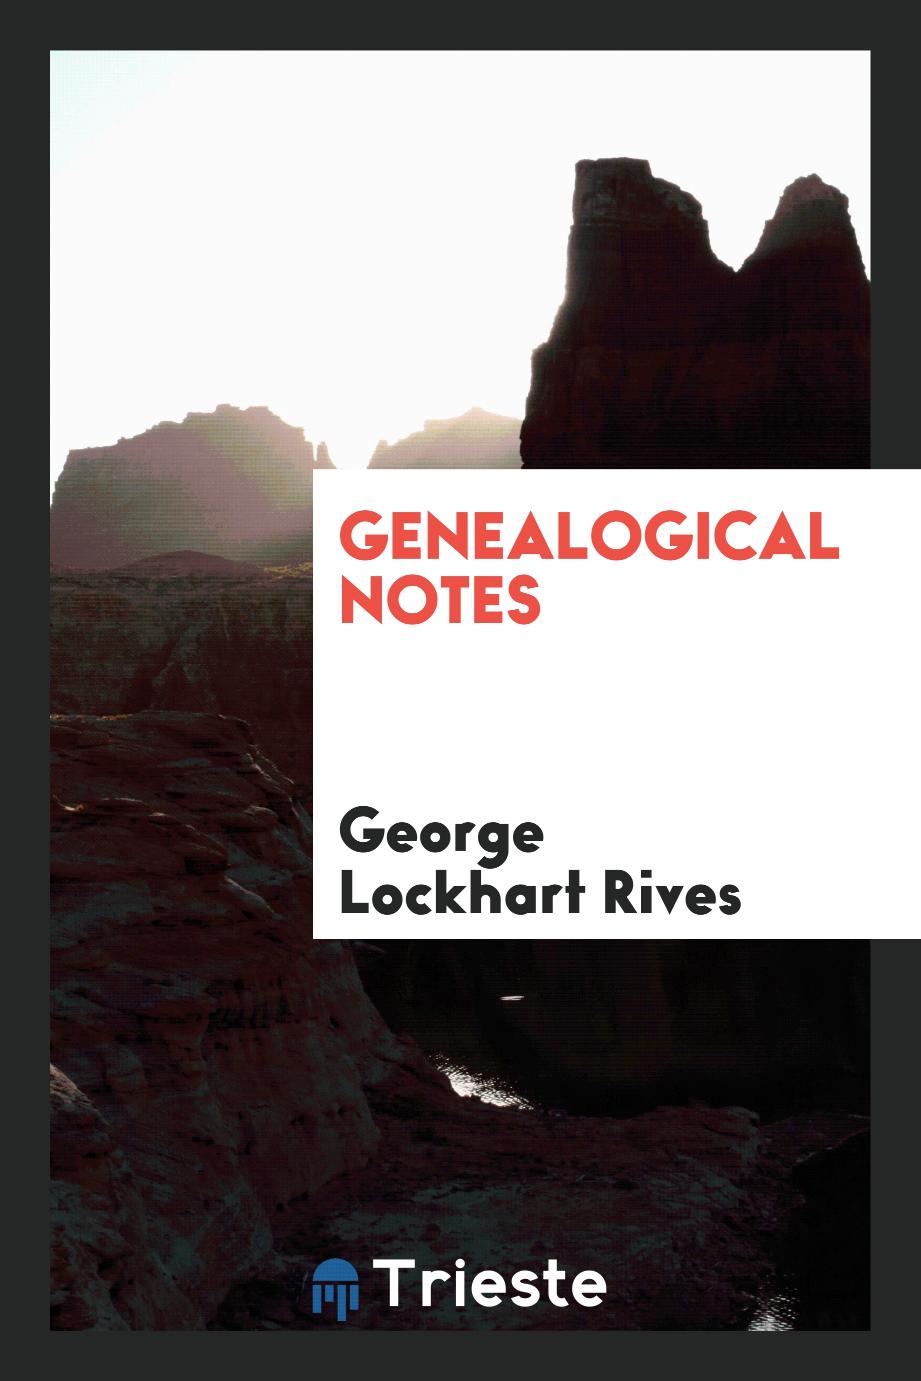 Genealogical notes